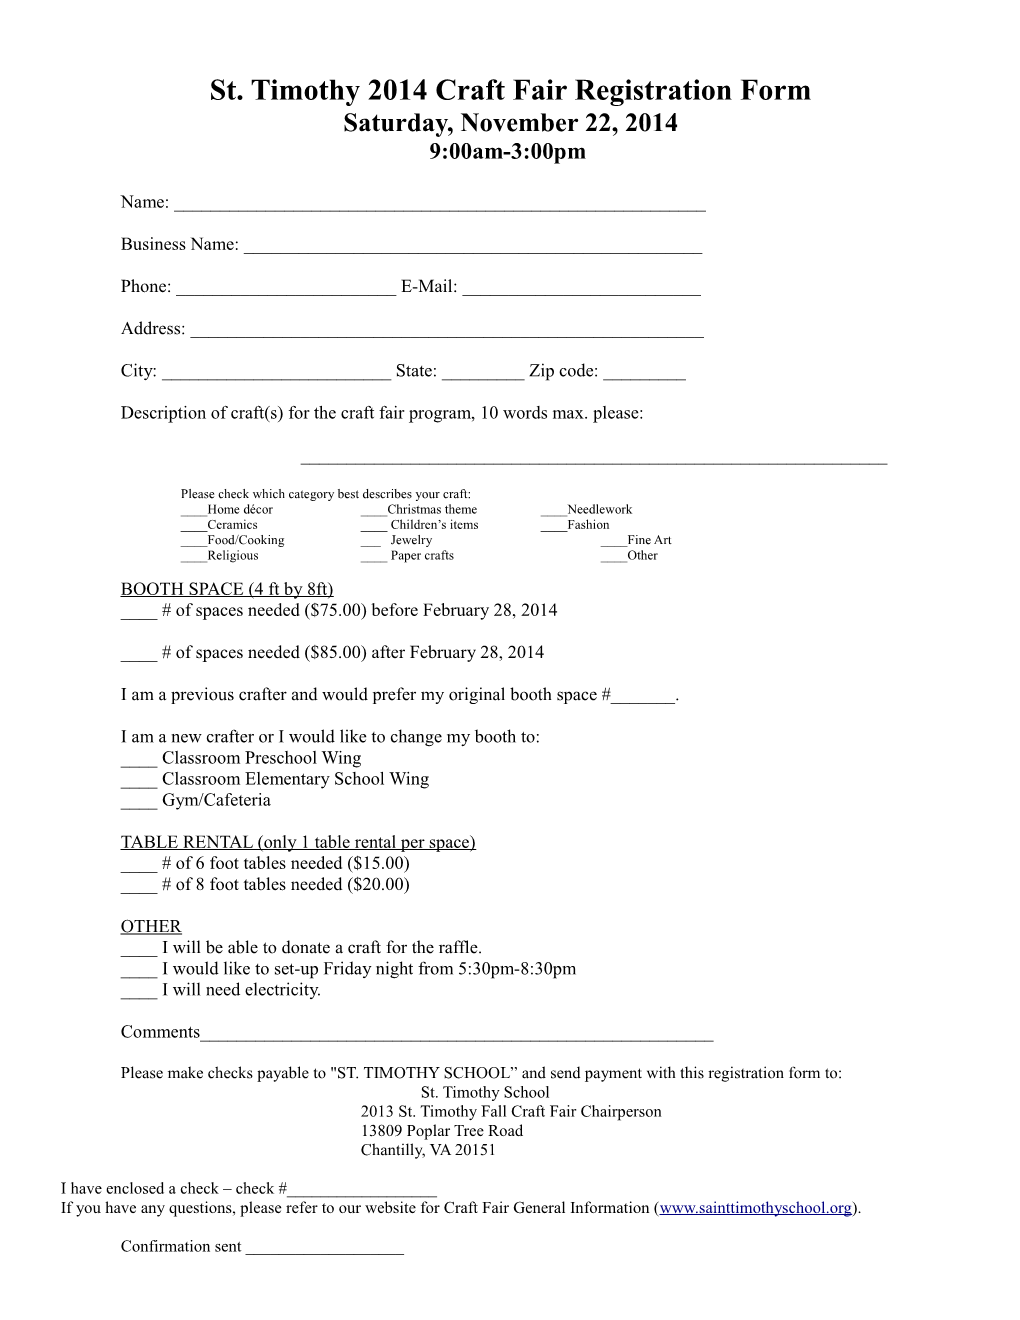 St. Timothy 2014 Craft Fair Registration Form